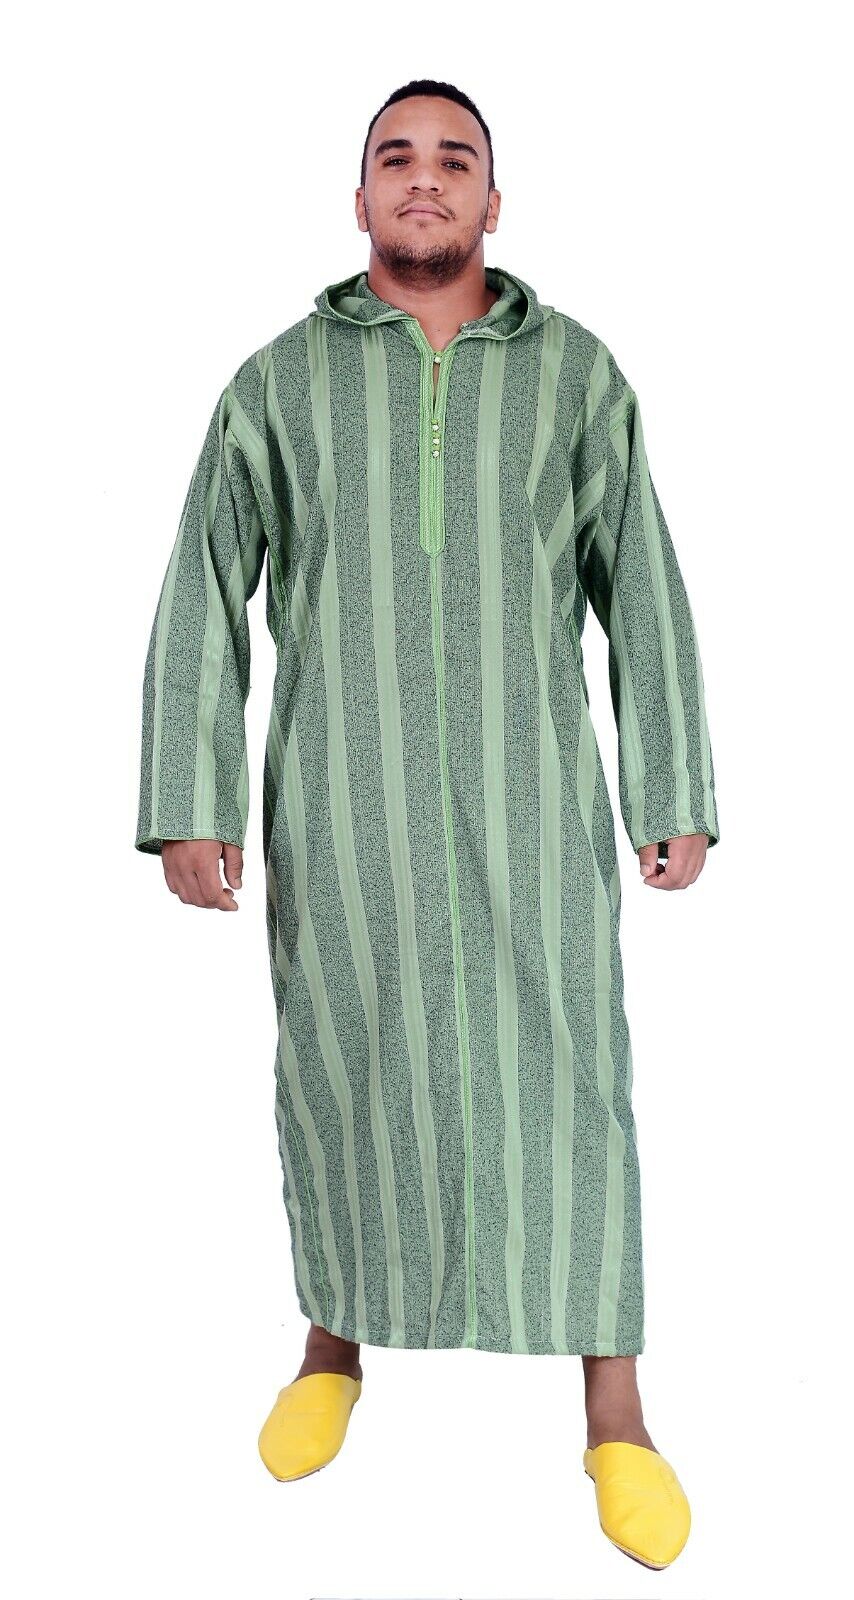 Moroccan Men Djellaba Hooded Caftan Kaftan Thobe Abaya Handmade Arab Green